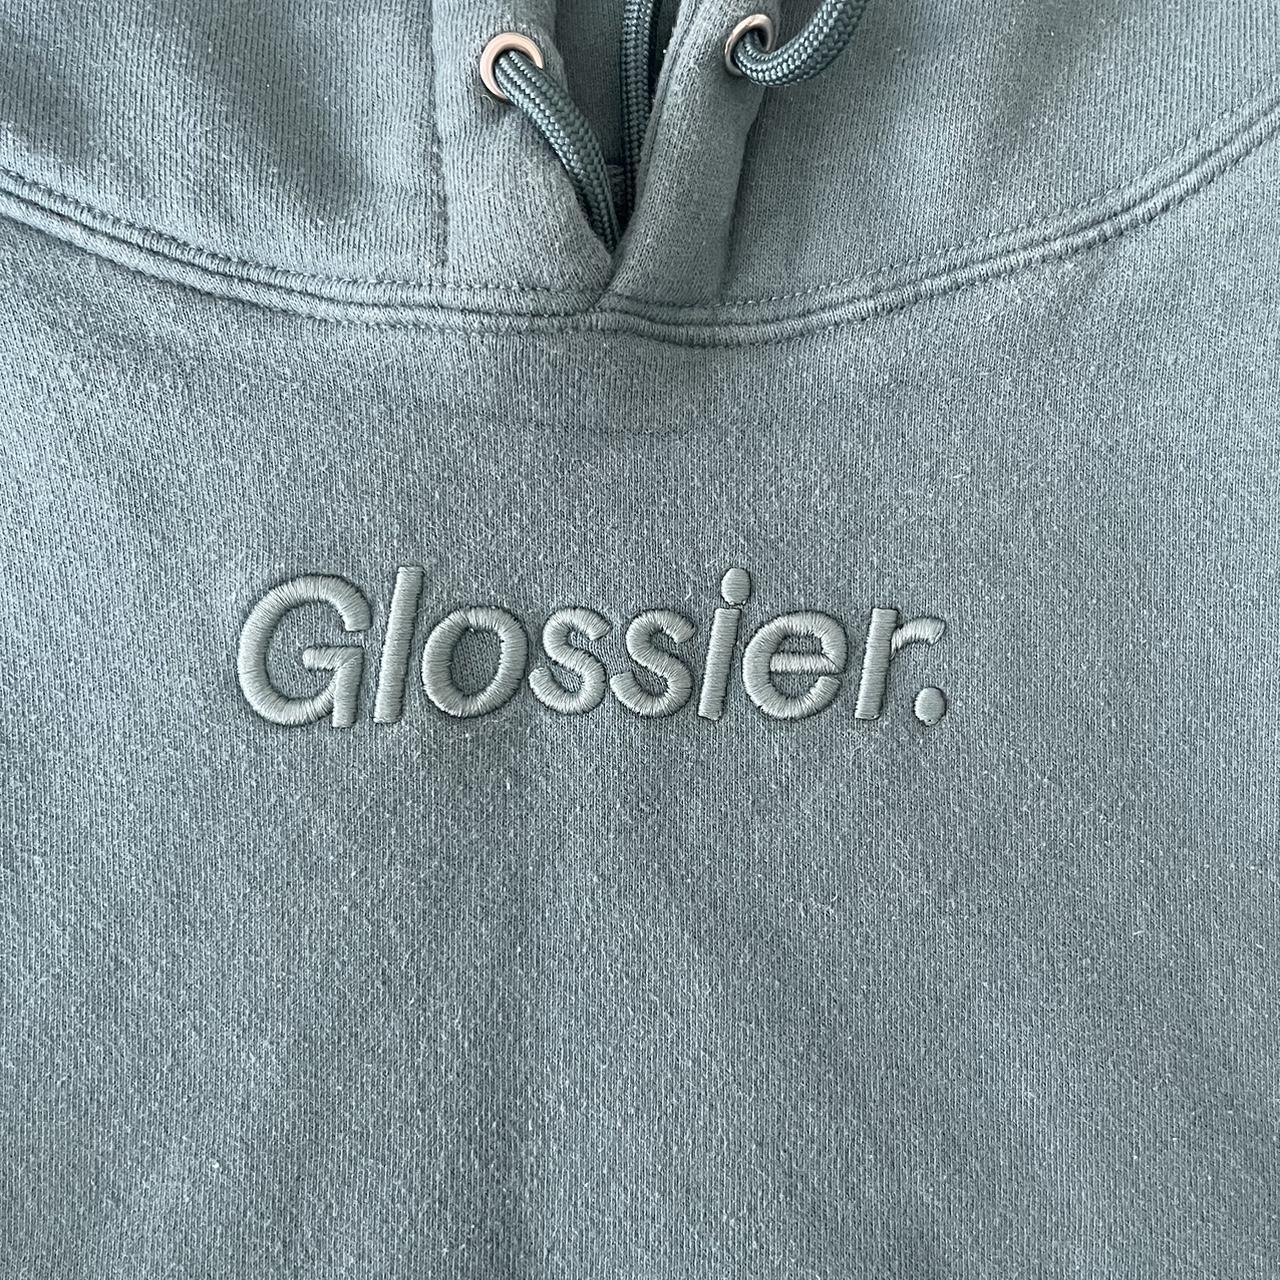 Glossier Women's Blue Hoodie (2)